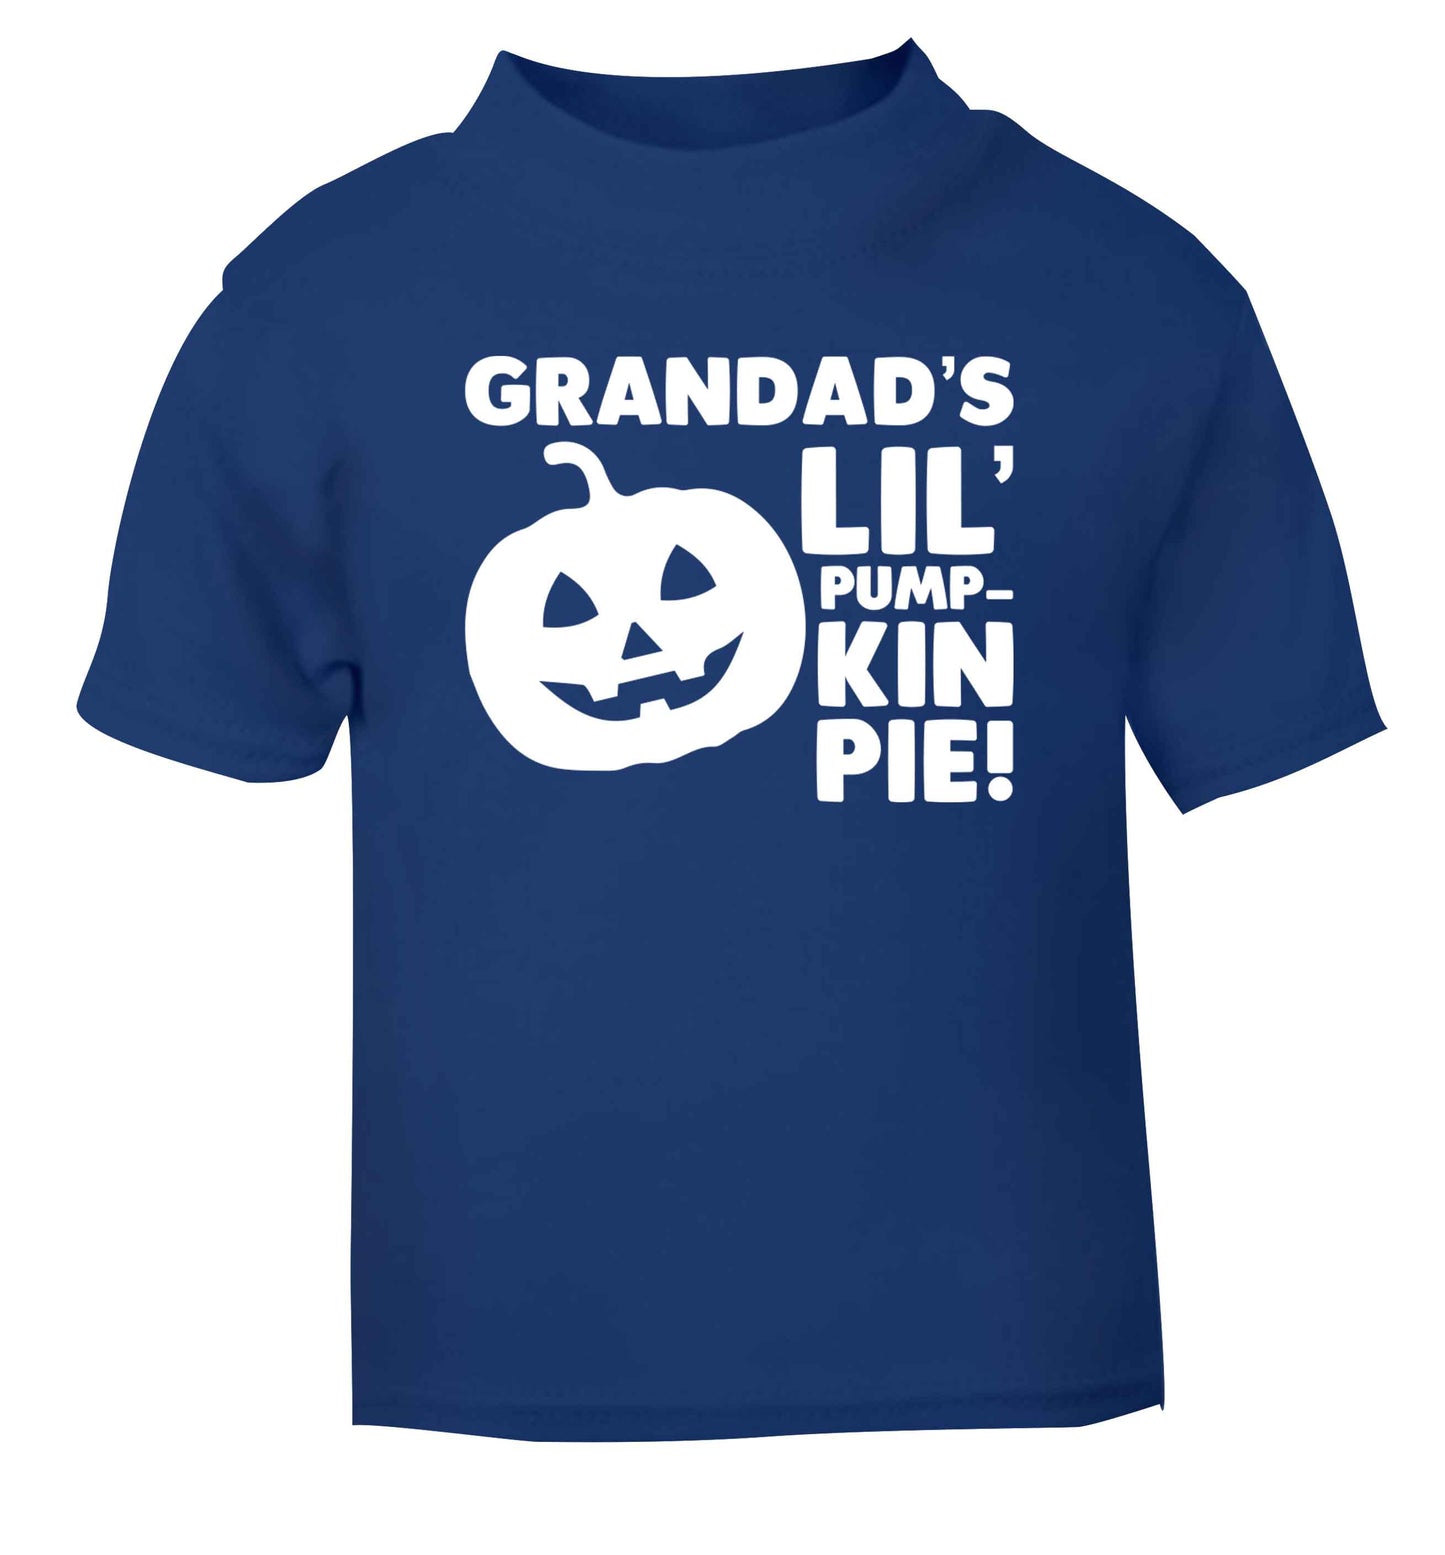 Grandad's lil' pumpkin pie blue baby toddler Tshirt 2 Years